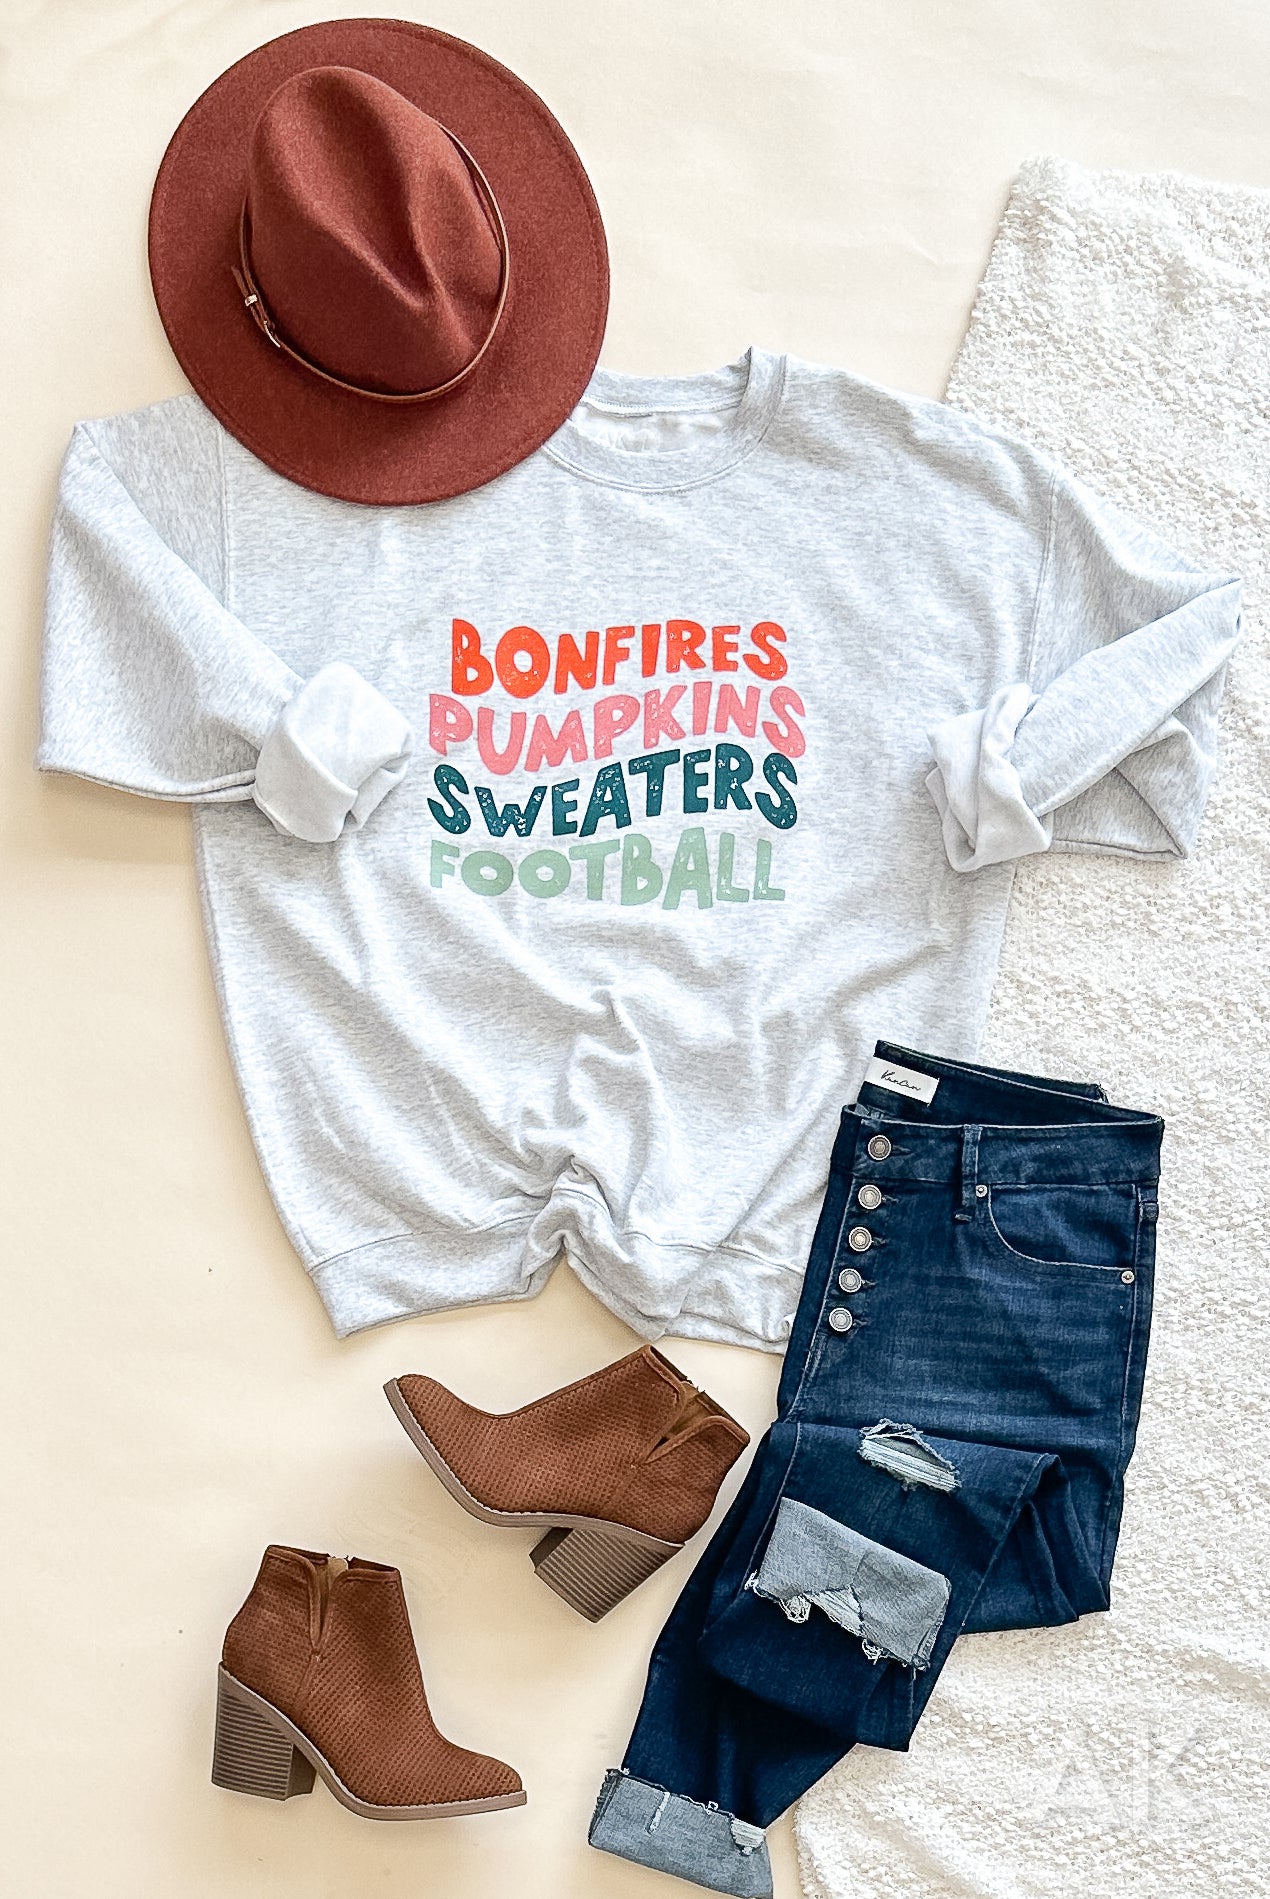 Bonfires, Pumpkins, Sweaters, Football Sweatshirt